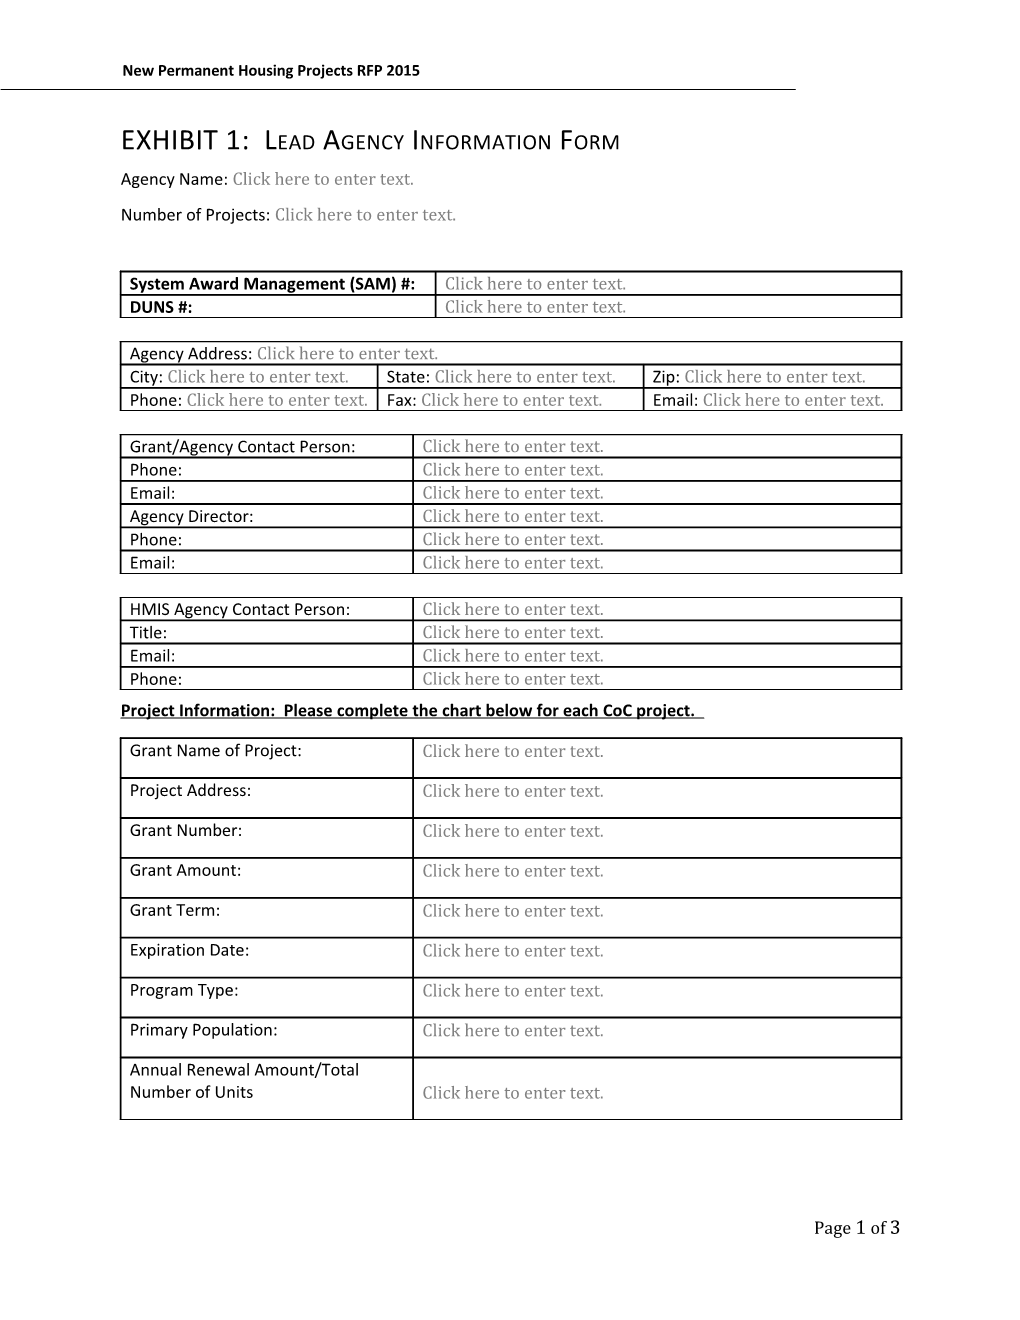 EXHIBIT 1: Lead Agency Information Form